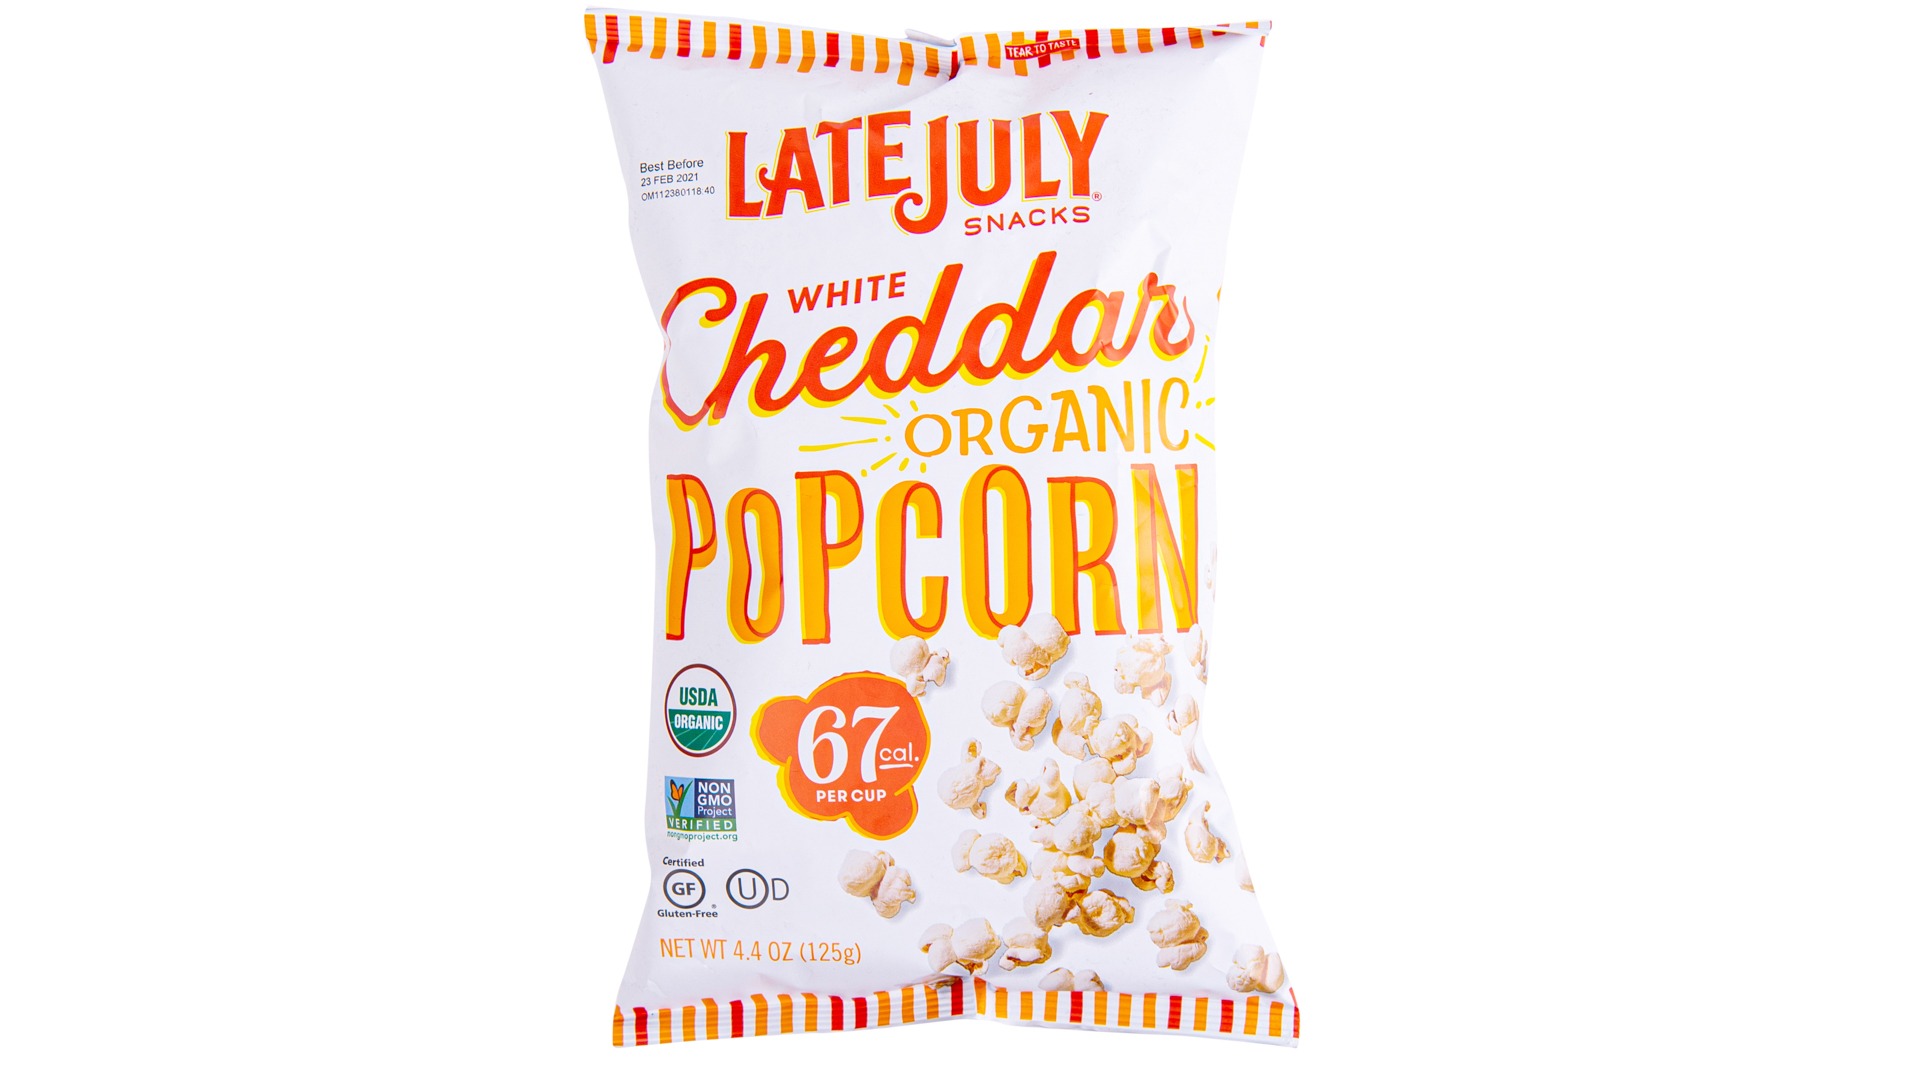 Organic Cheddar Popcorn (Late July)